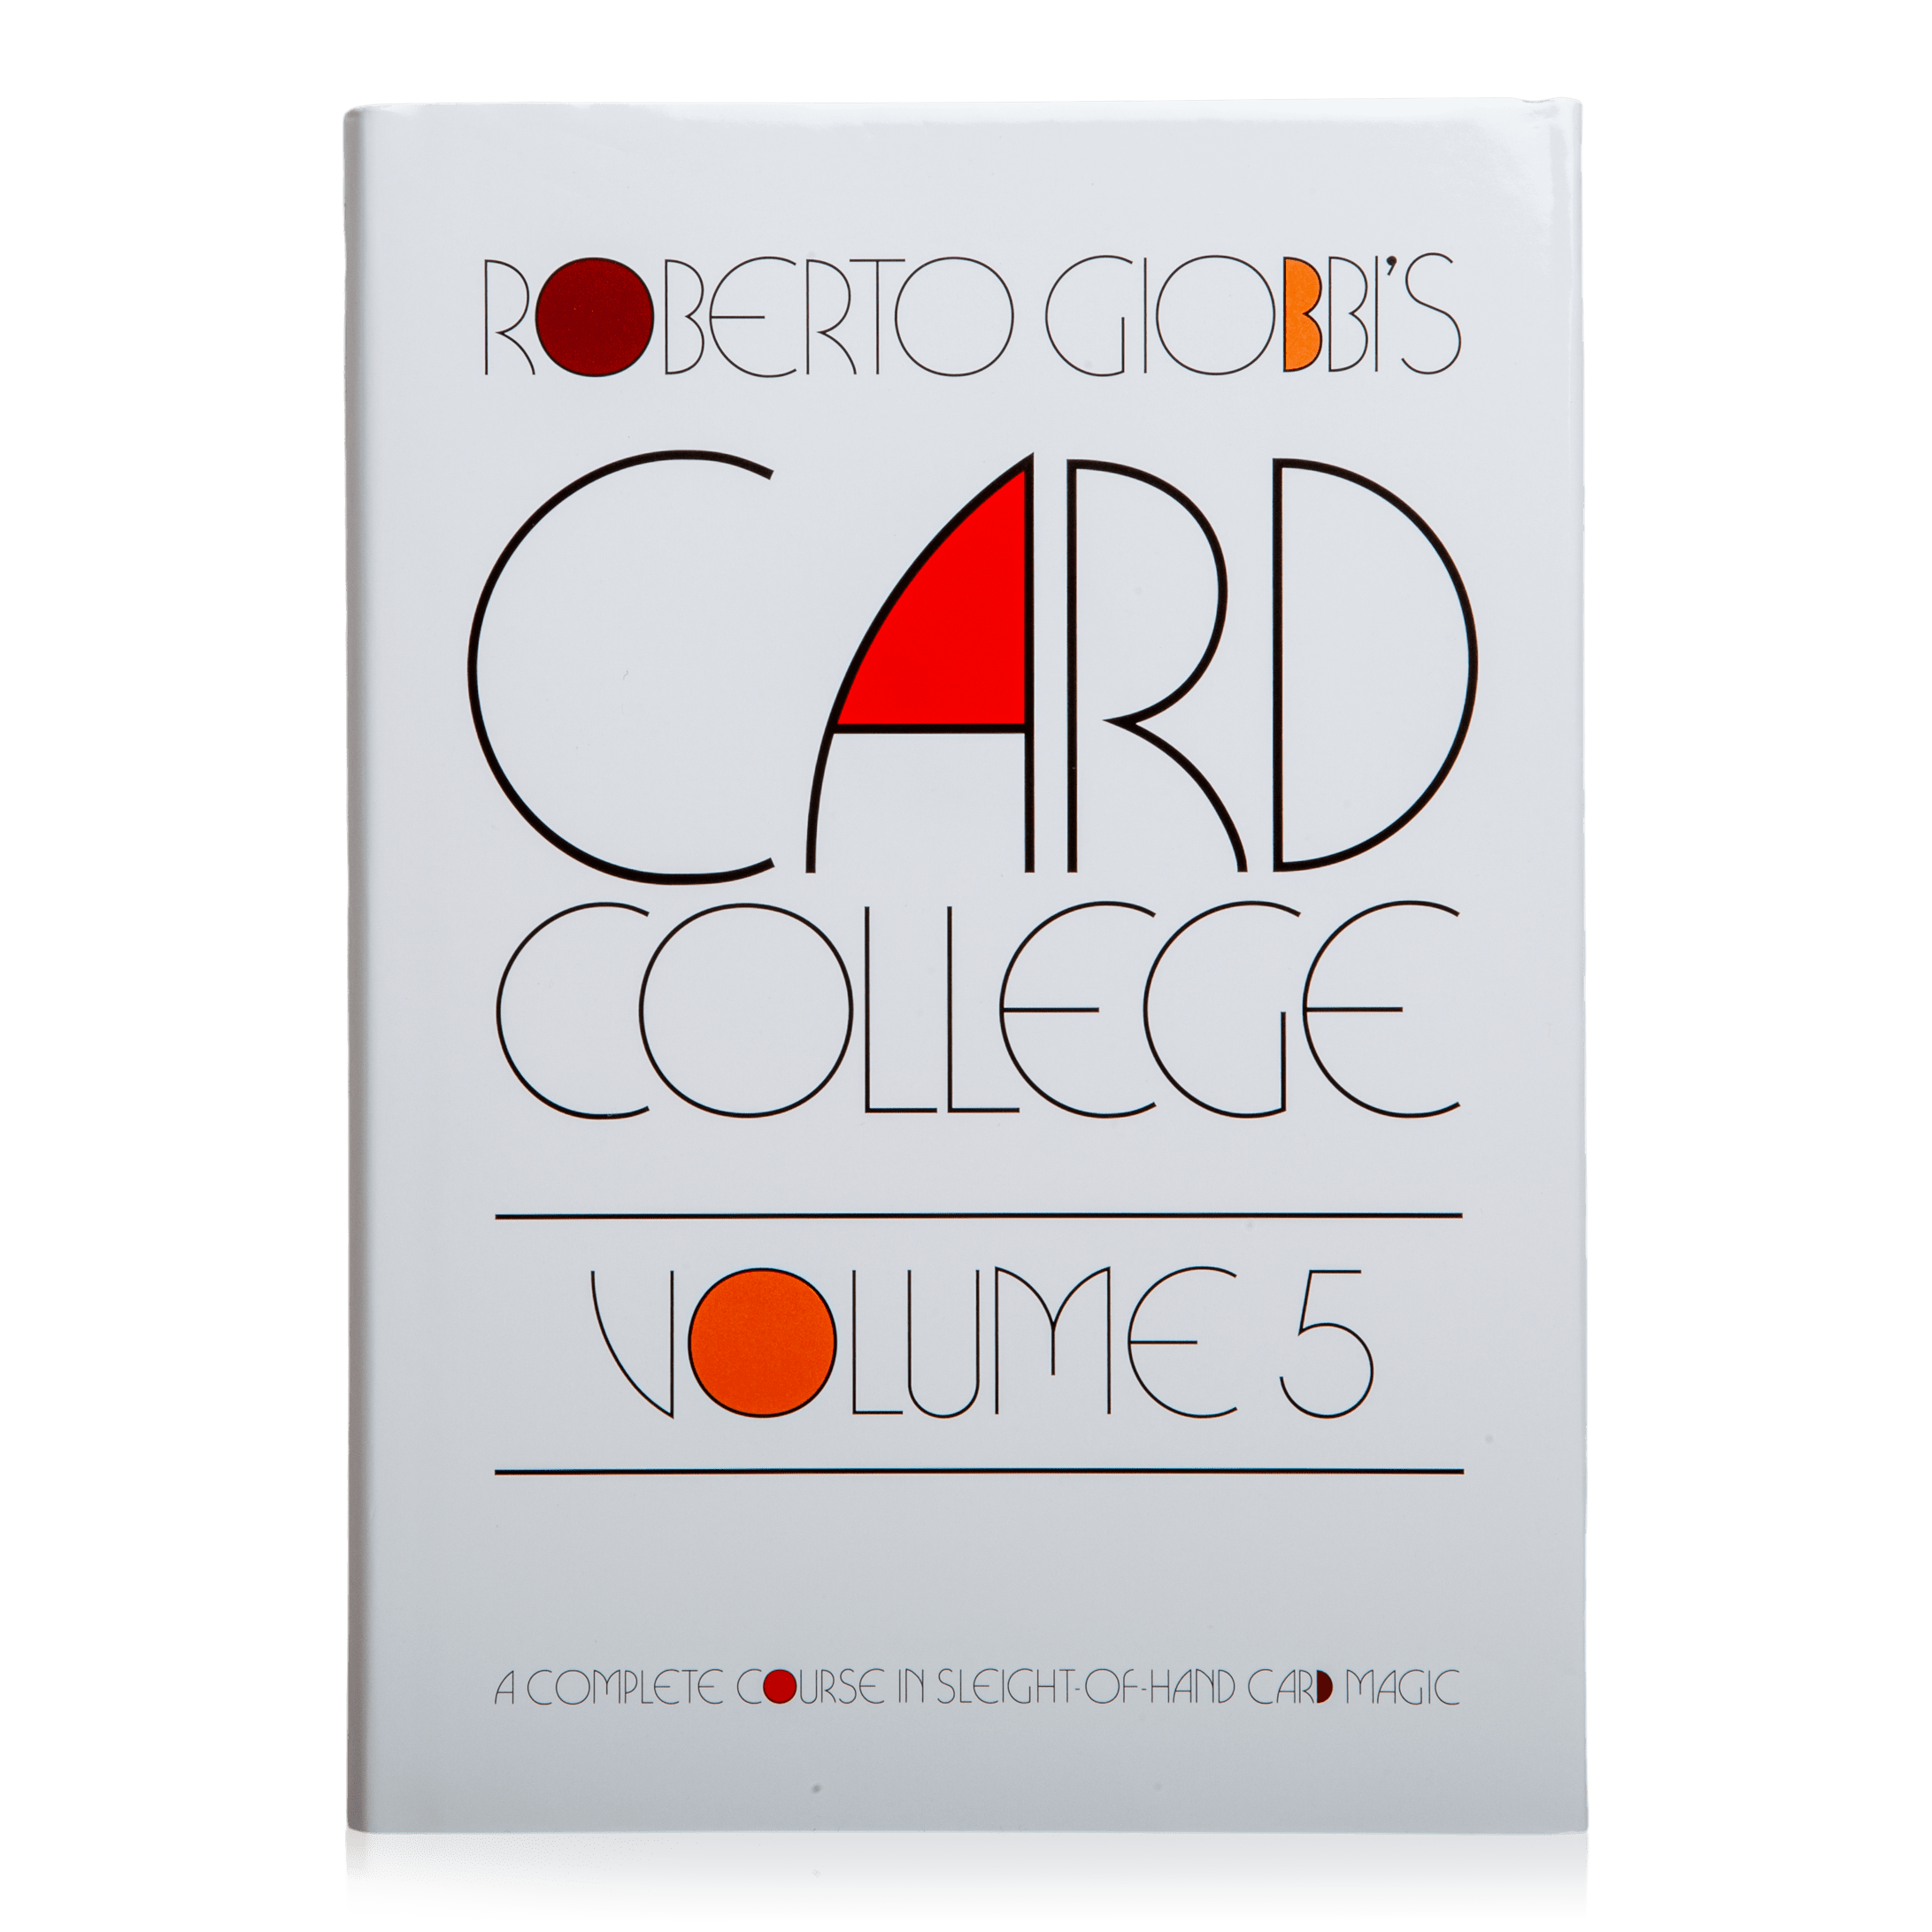 Card College books by Roberto Giobi